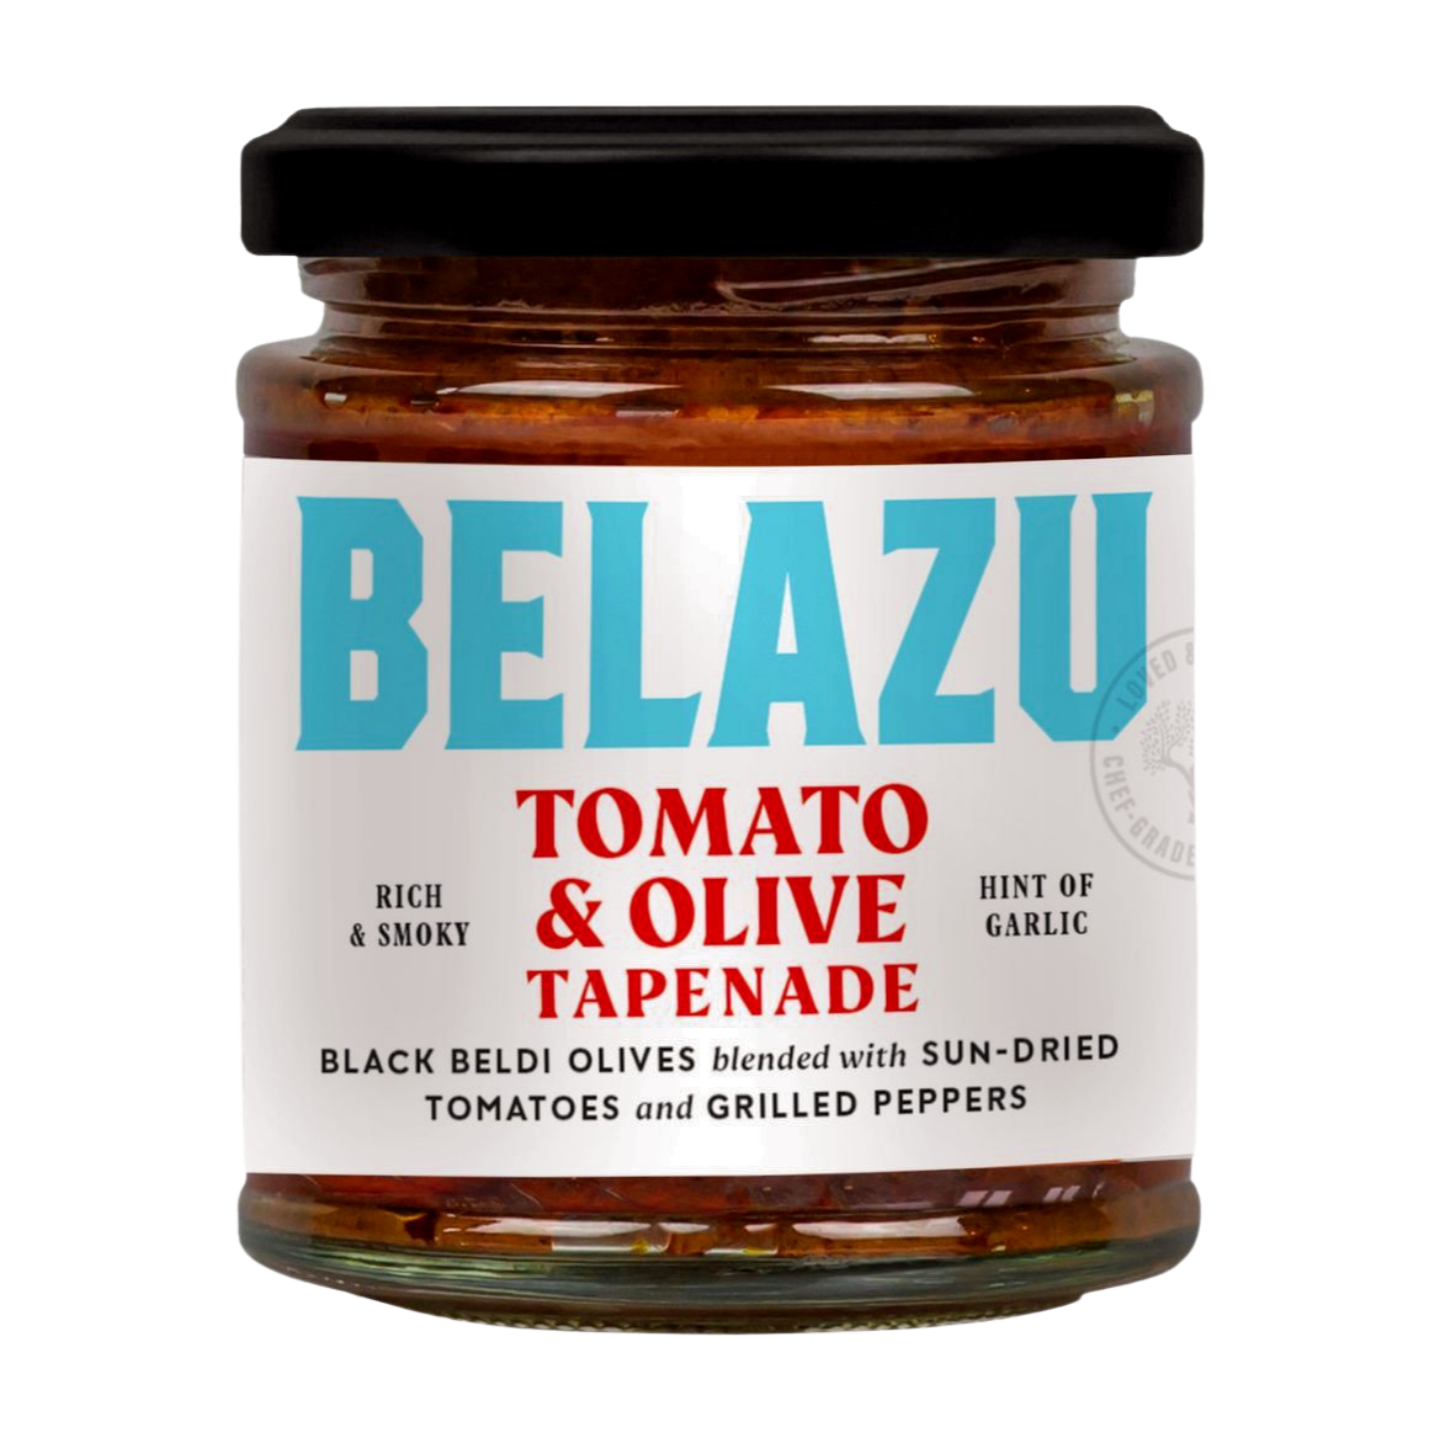 Belazu Tomato & Olive Tapenade (6x165g)